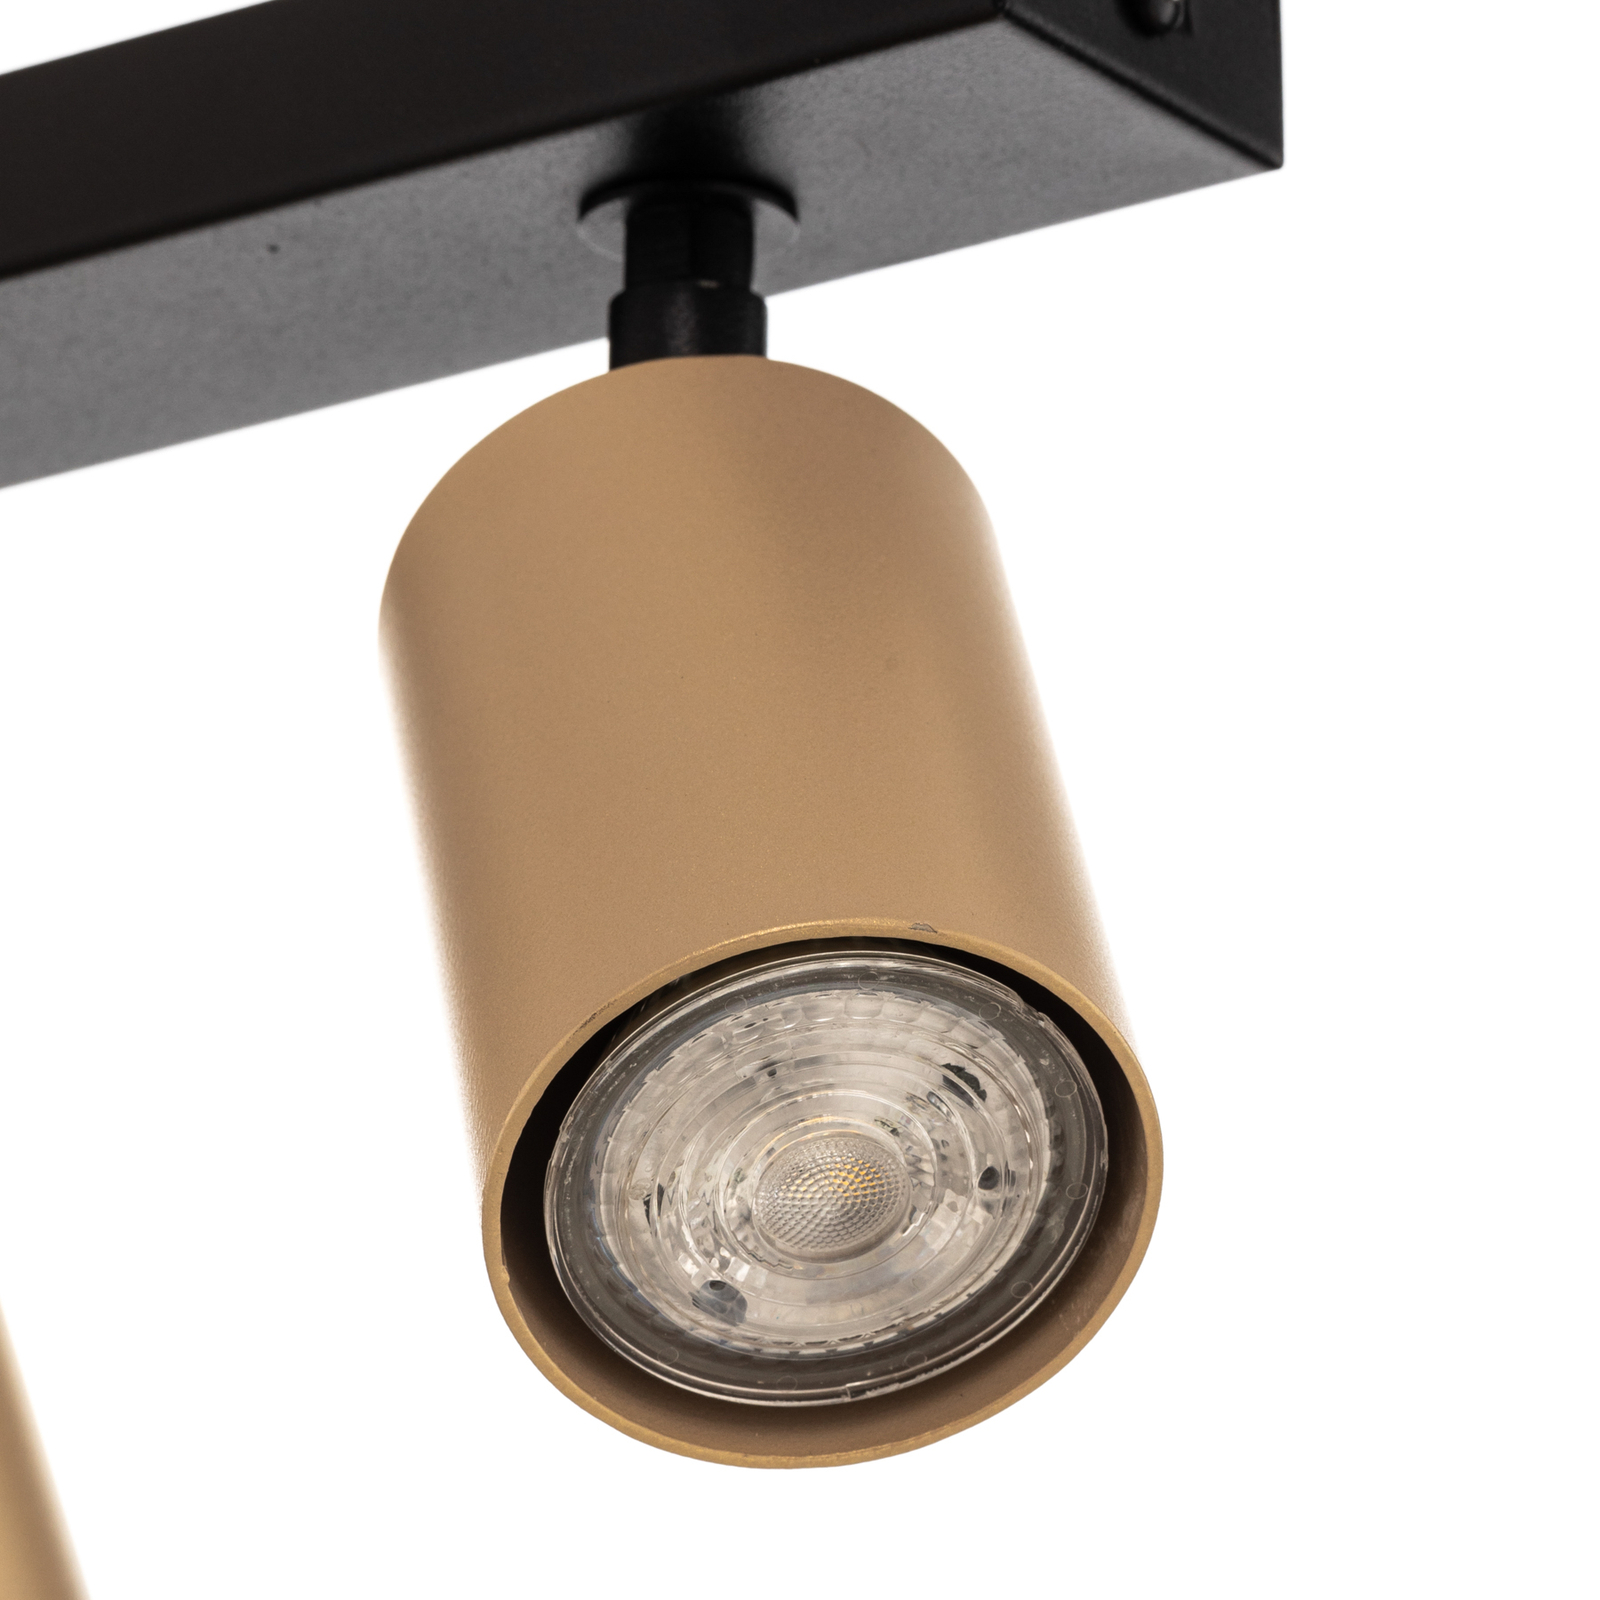 Прожектор за таван Zoom, 3-светлинен, черен/златист